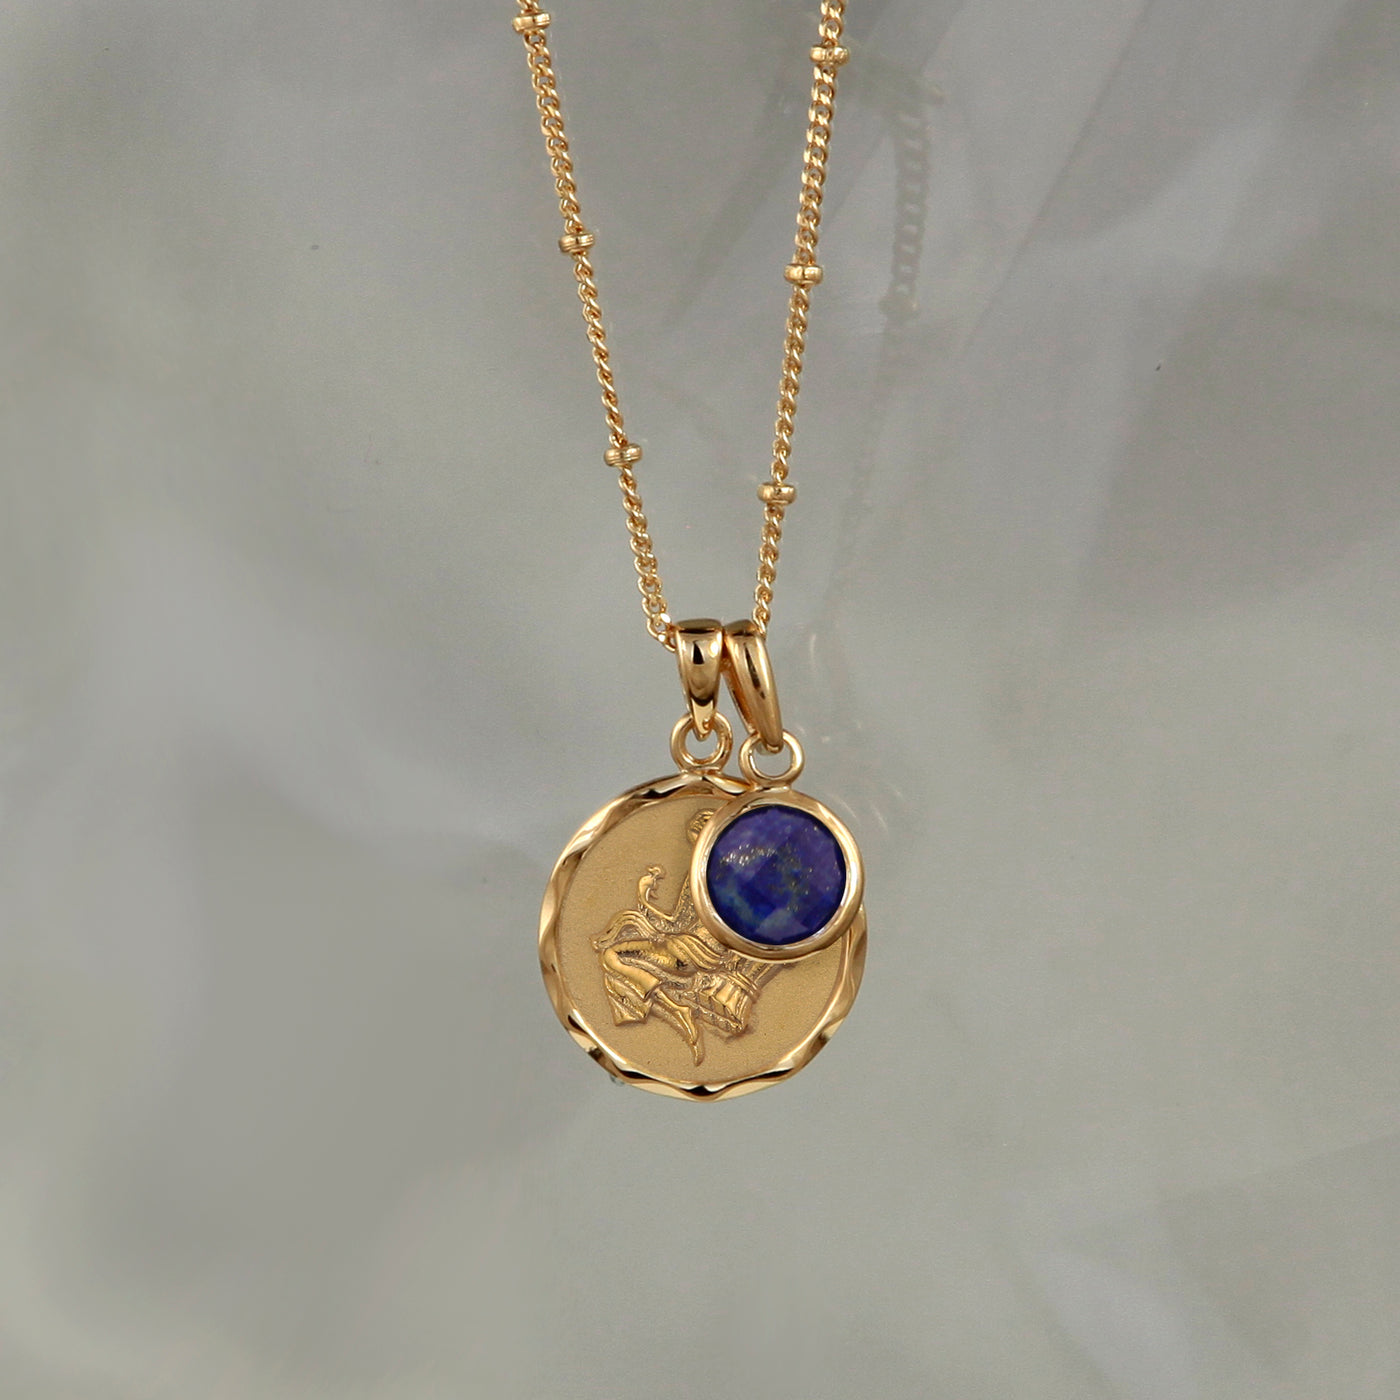 Gold Zodiac Sign Necklace - Virgo with Birthstone